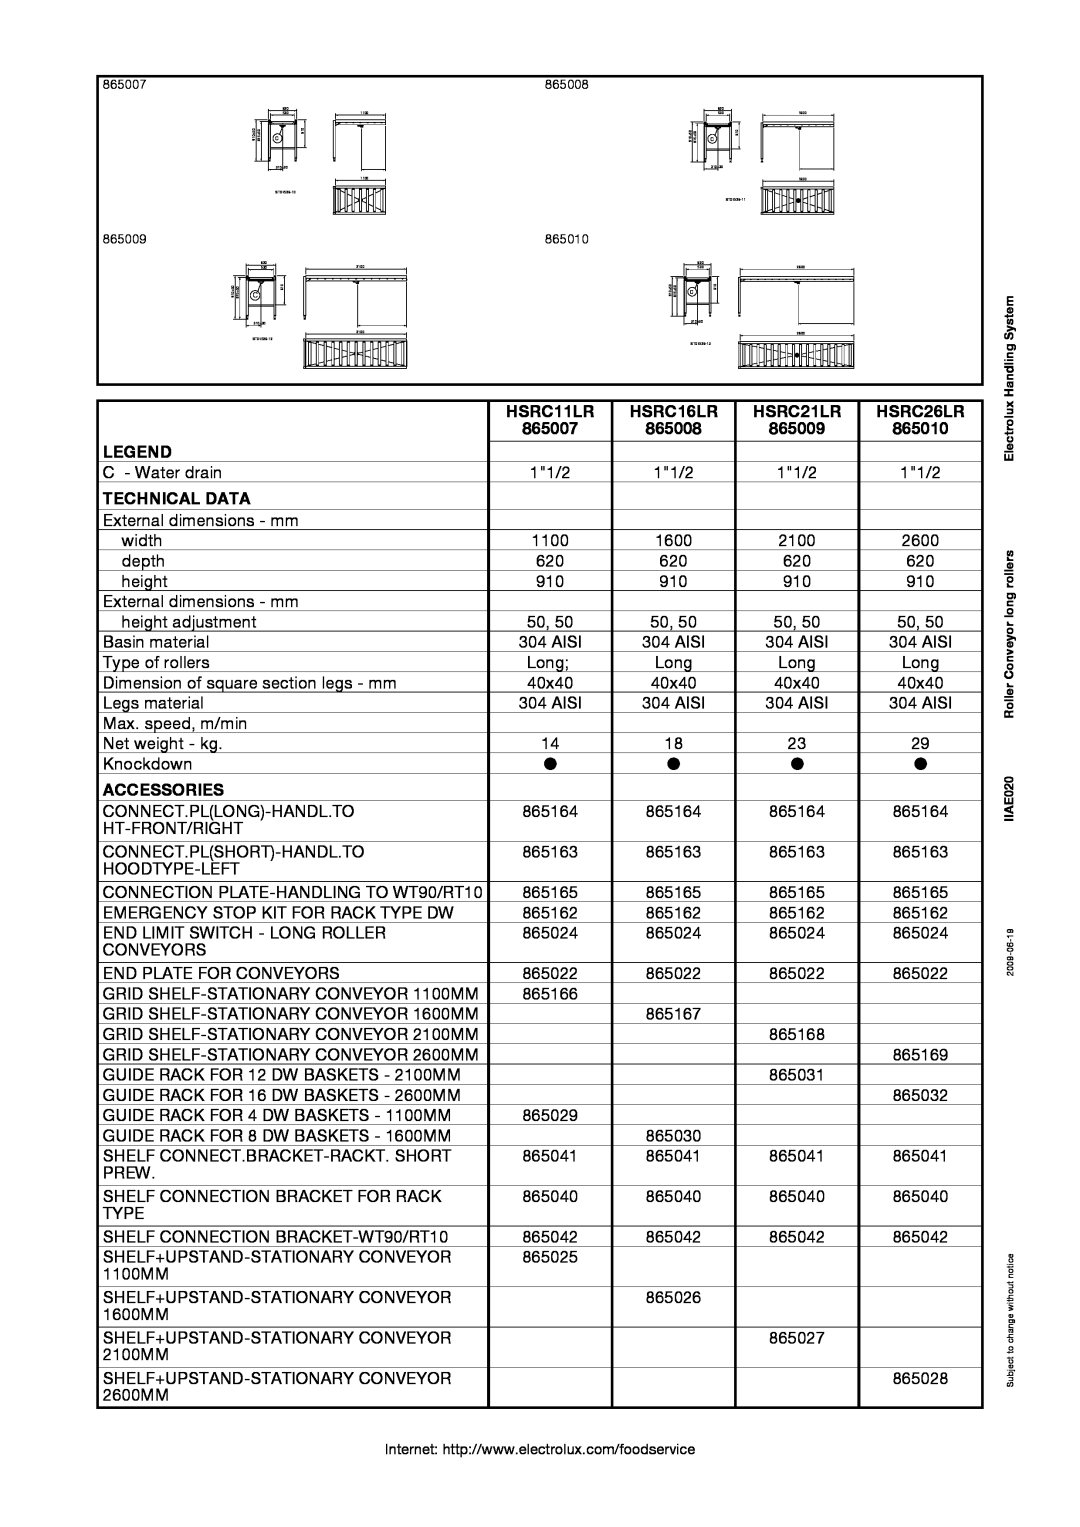 Electrolux 865008 manual HSRC11LR, HSRC16LR, HSRC21LR, HSRC26LR, Technical Data, Accessories 